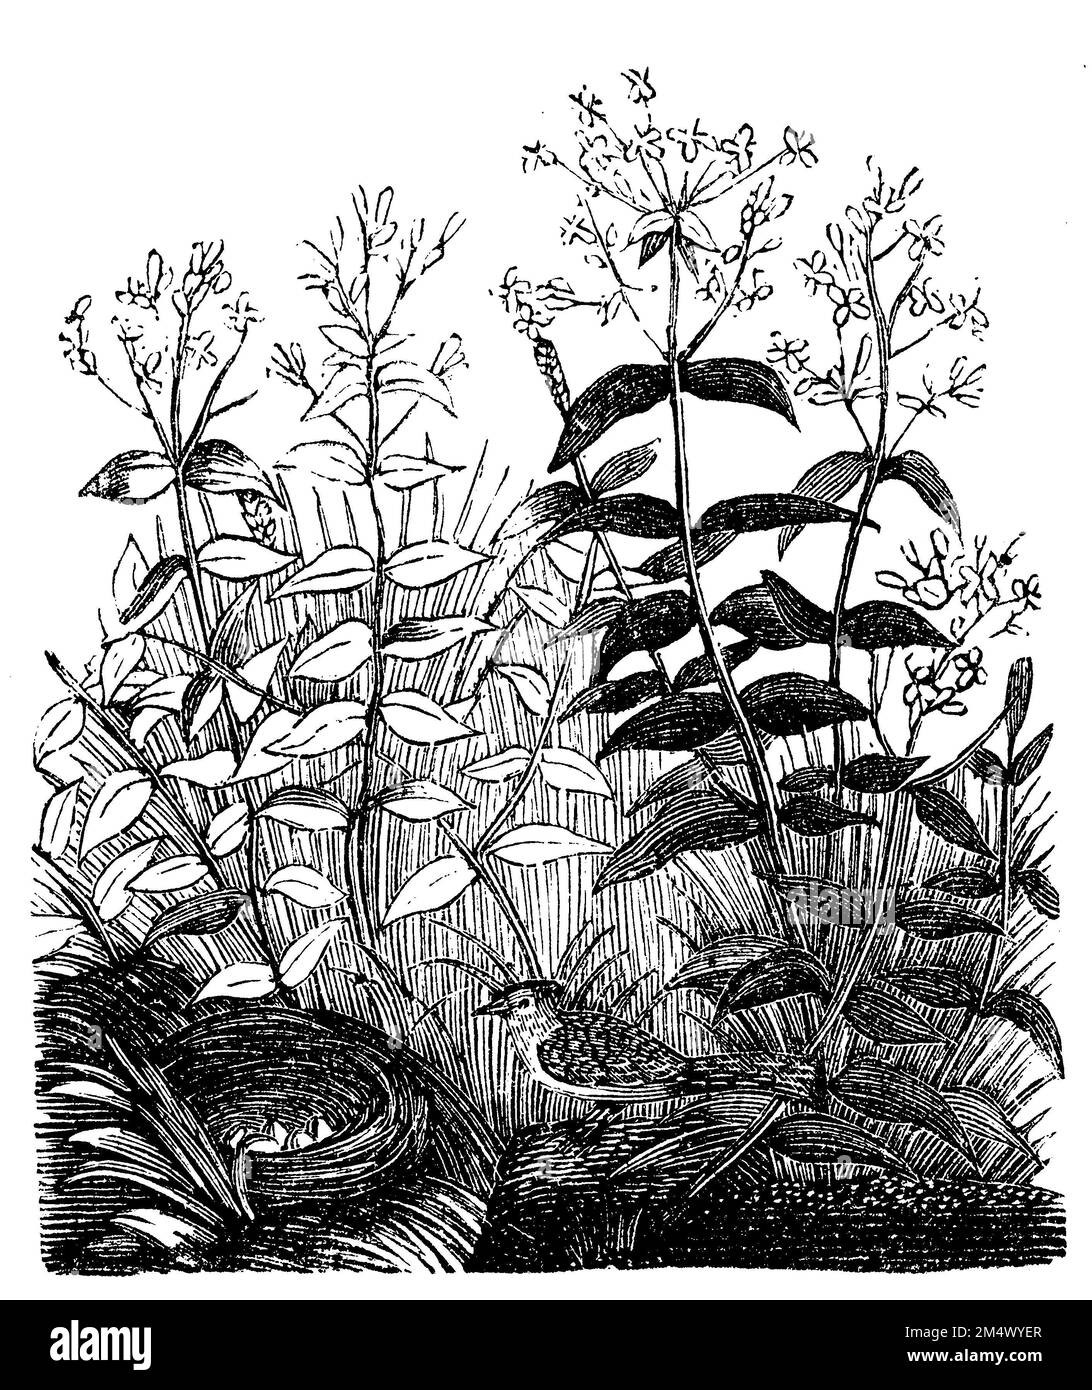 Soapwort comune, Saponaria officinalis, anonym (libro biologico, 1881), Gewöhnliches Seifenkraut, saponaire officinale Foto Stock